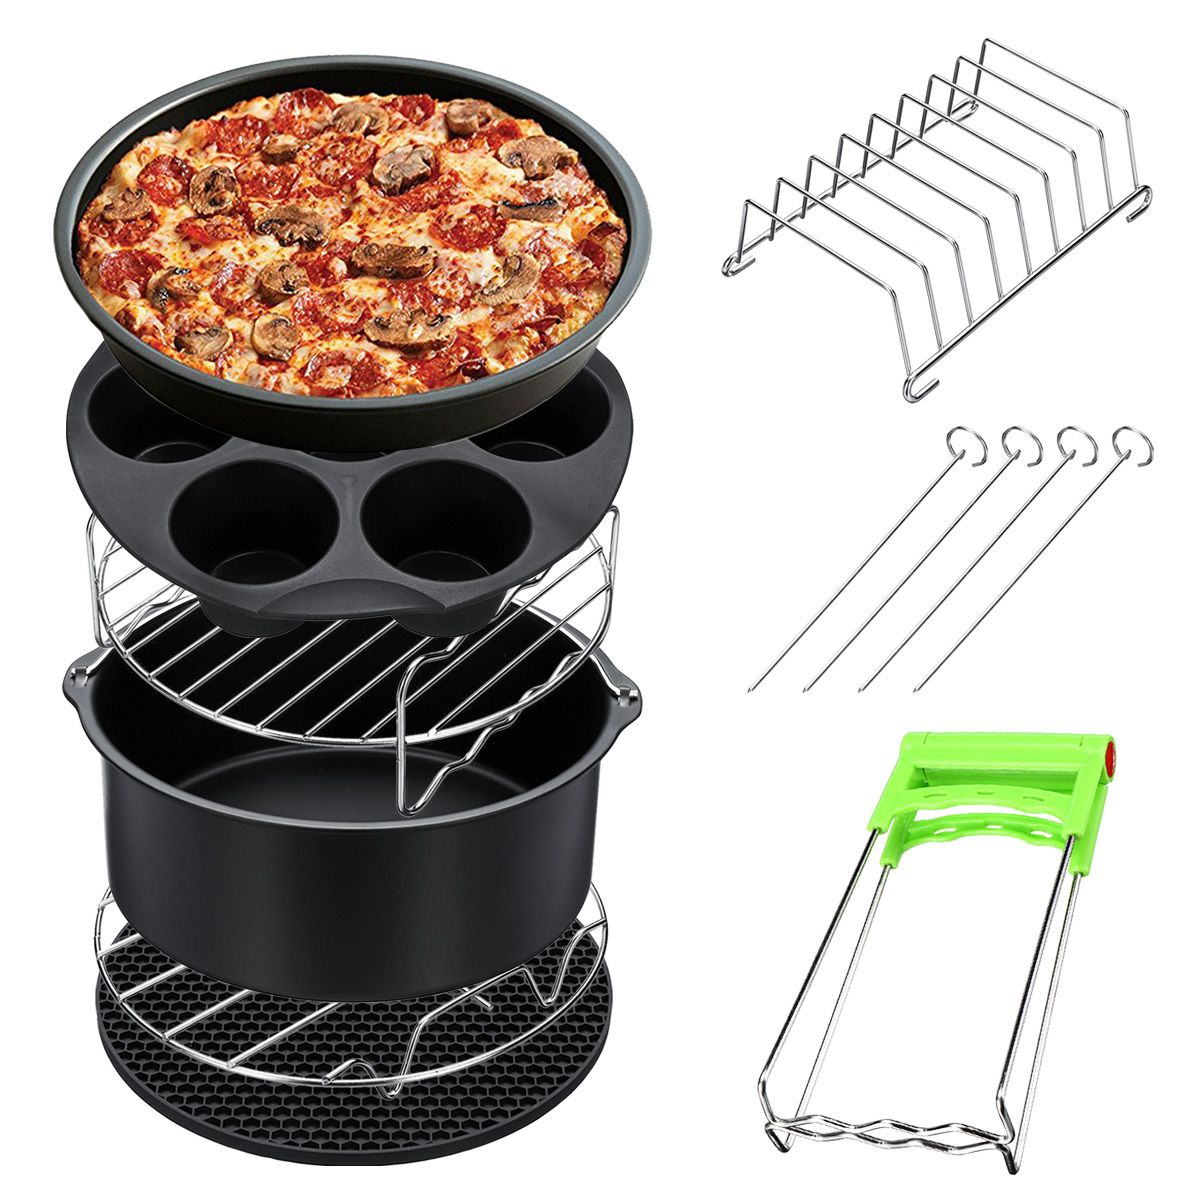 8Pcs-8-Inch-Air-Fryer-Accessories-Set-Chips-Dish-Baking-Pizza-Pan-Kitchen-Toolss-5258QT-1386825